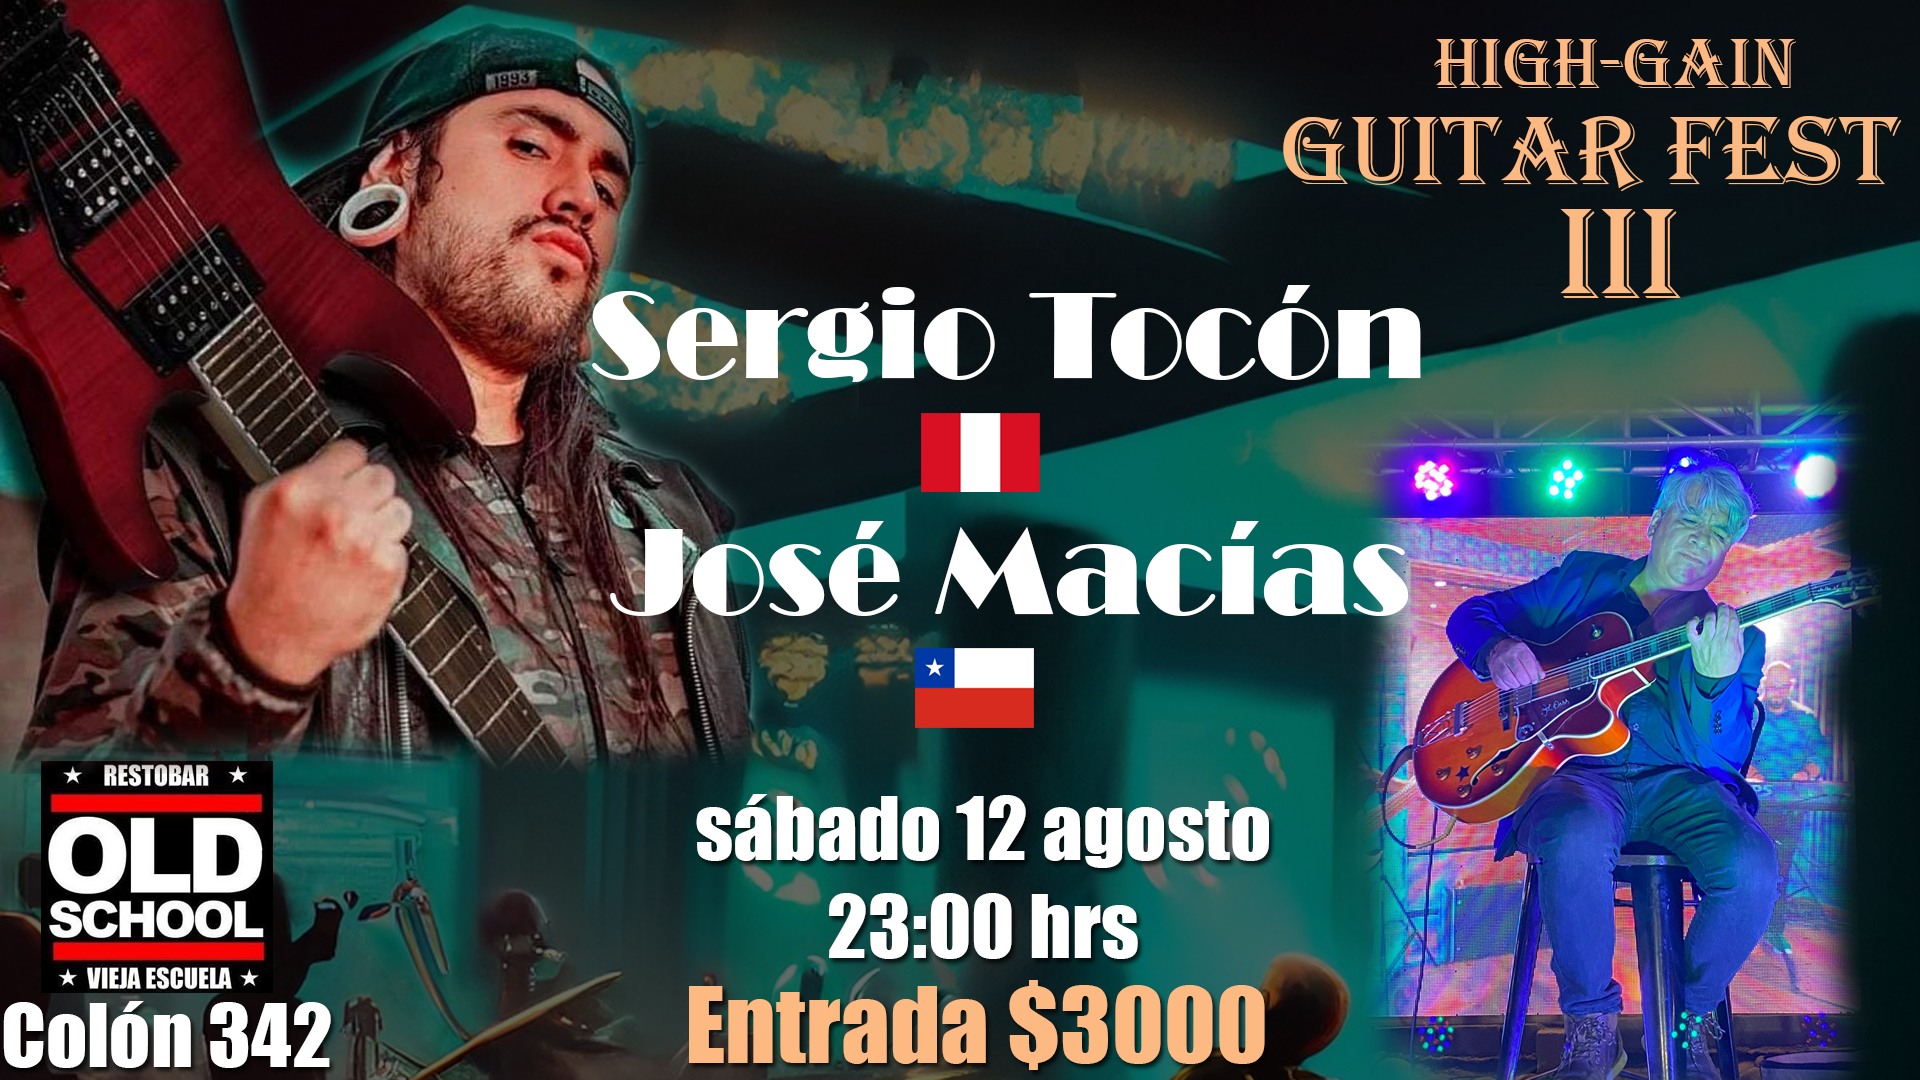 High Gain - Guitar Fest III: Sergio Tocón y Jose Macias